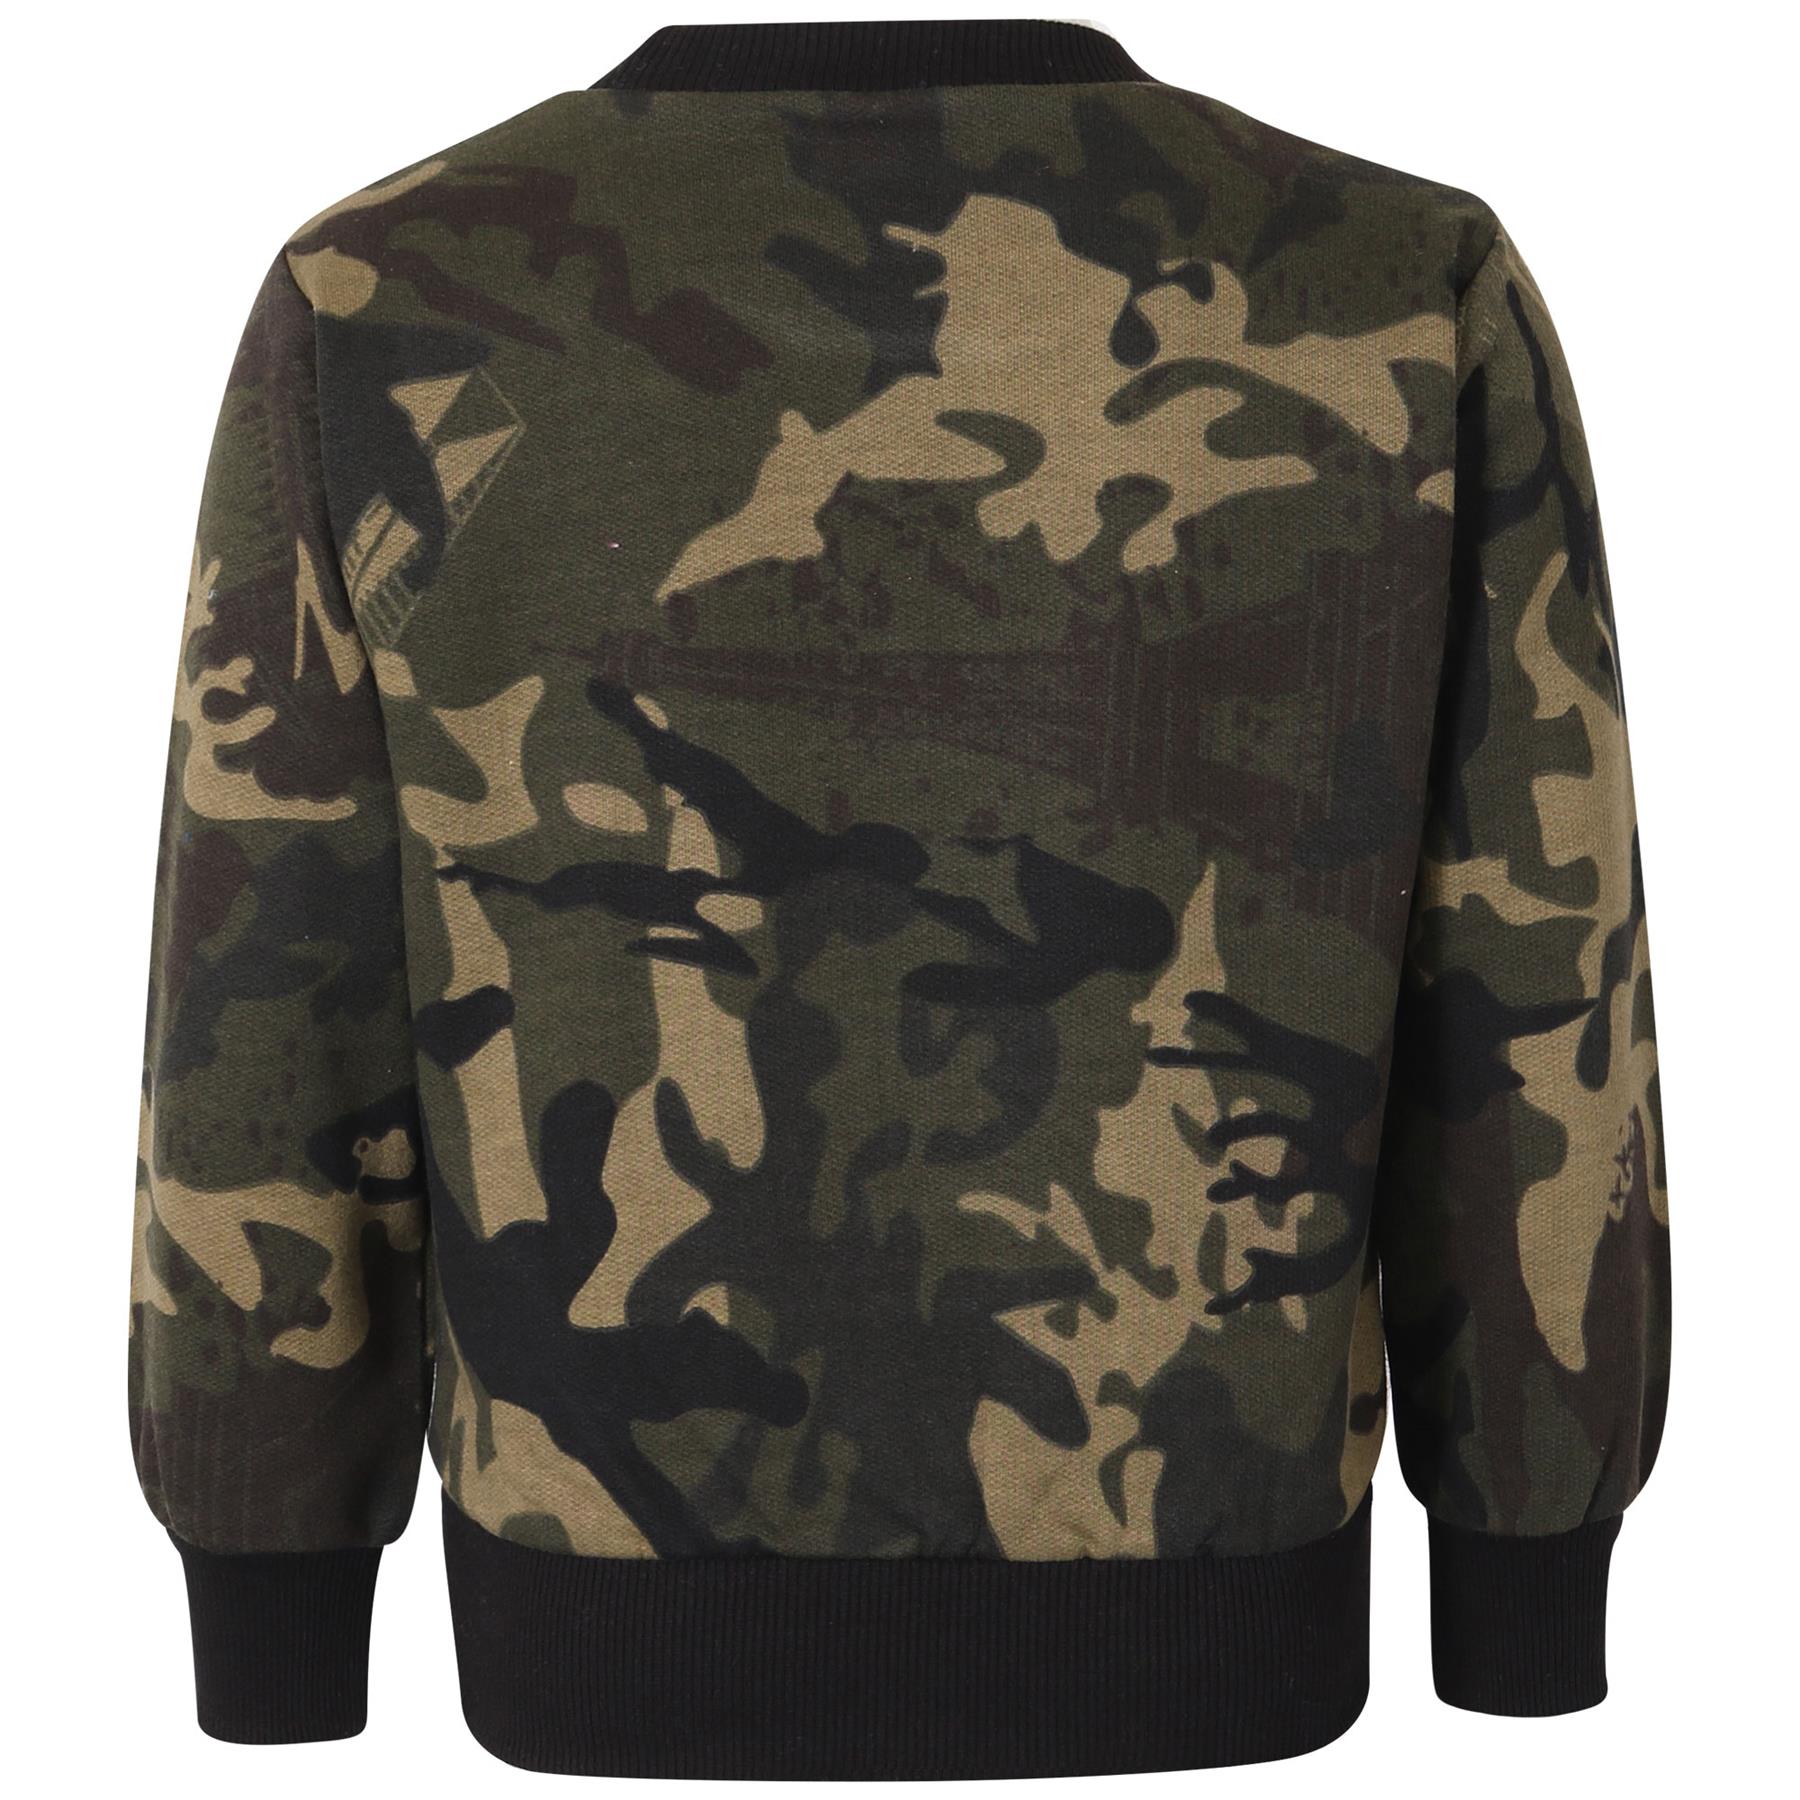 Girls Boys Camouflage Sweatshirt & Bottom Tracksuit